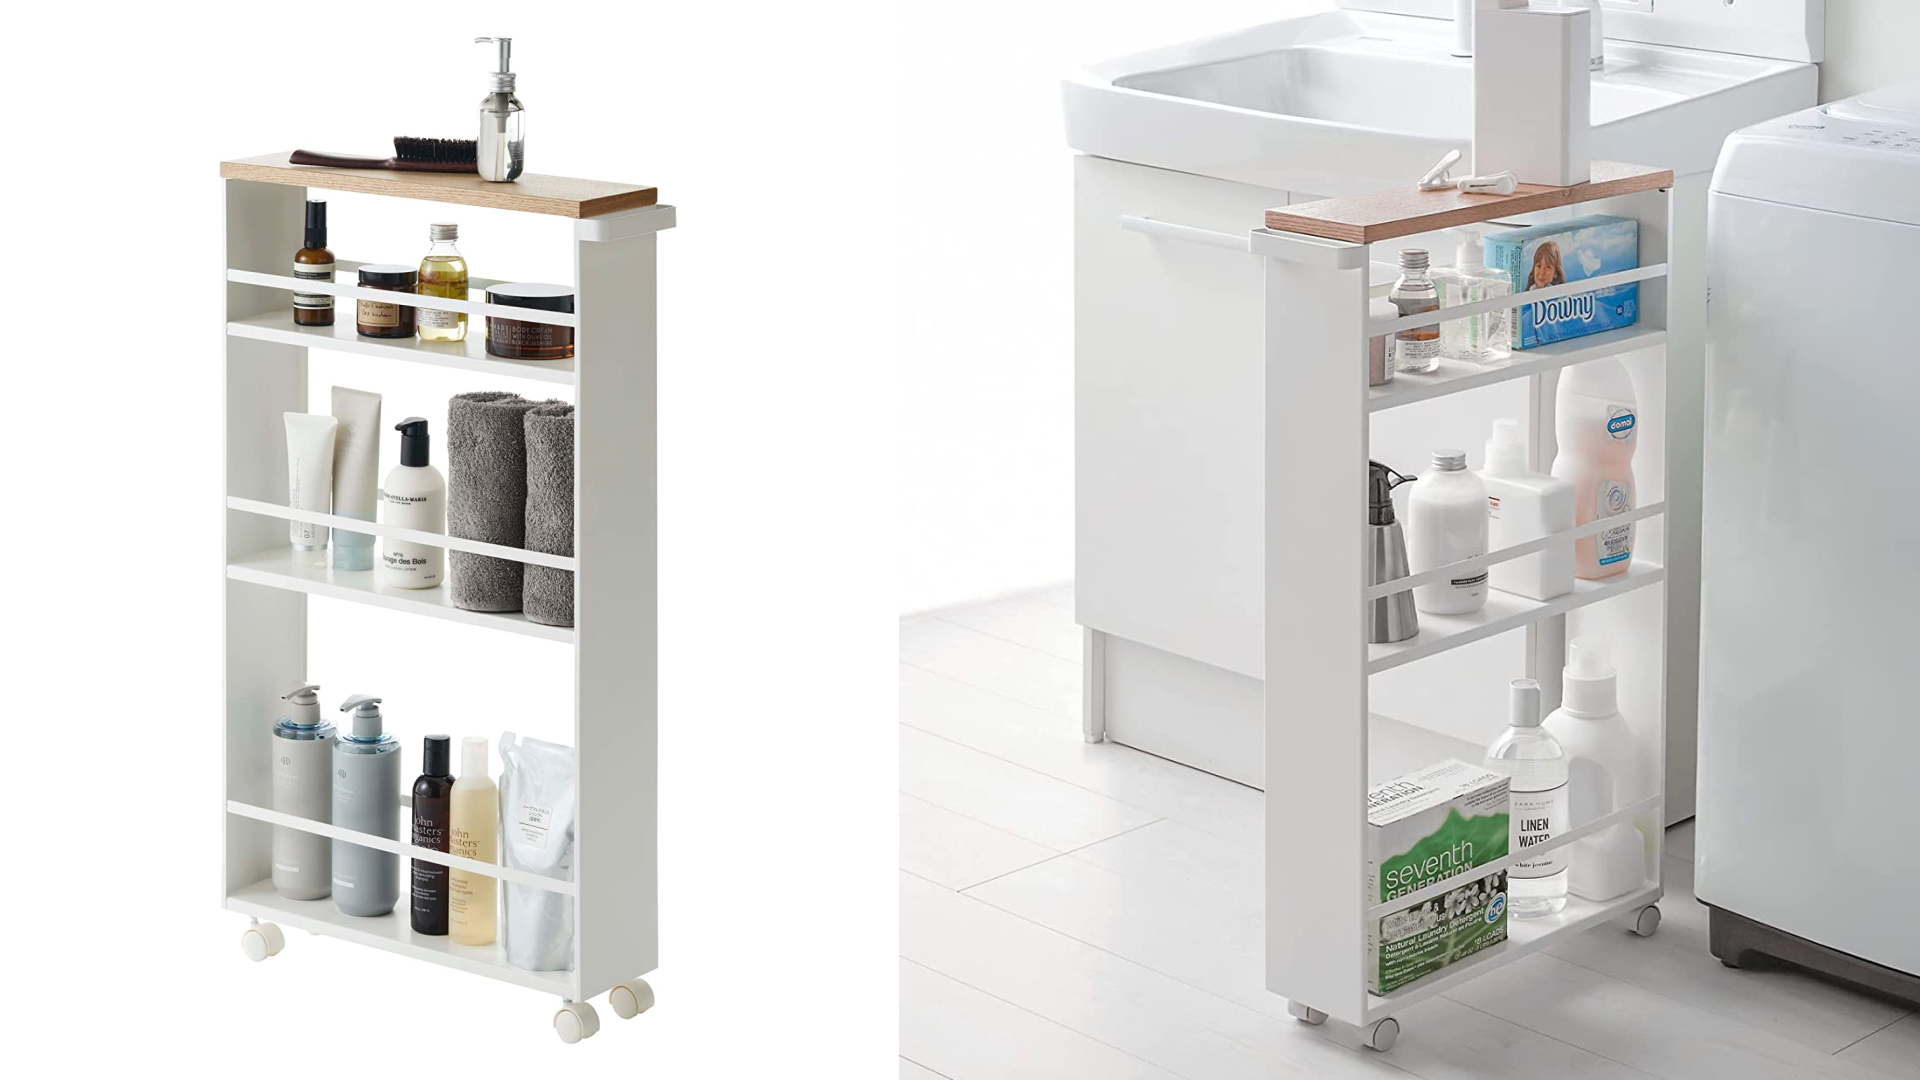 NiHome Acrylic Wall Mount Organizer 2-Pack, Slim Multi-Use Over Cabinet Storage Bins No-Drill Installation, Versatile Use for Kitchen, Bathroom